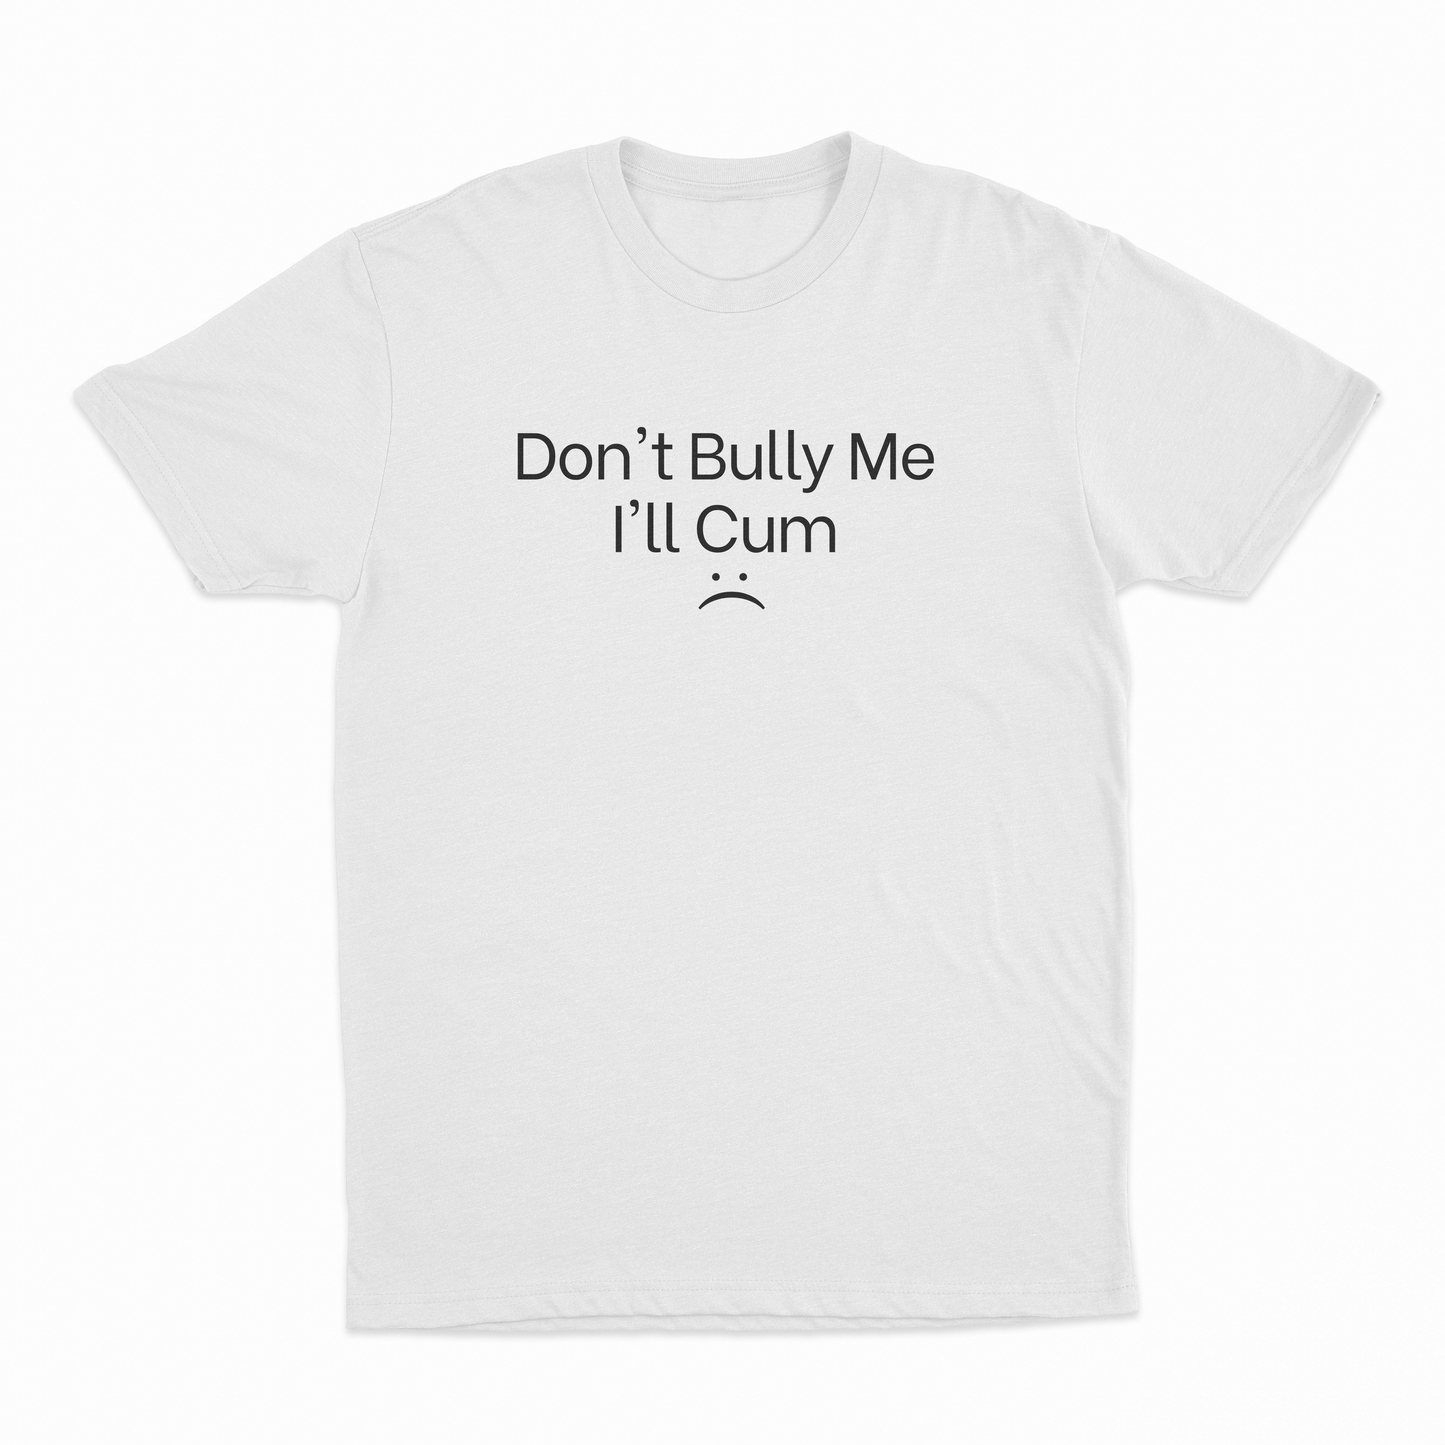 Don't Bully Me I'll Cum :( T-Shirt